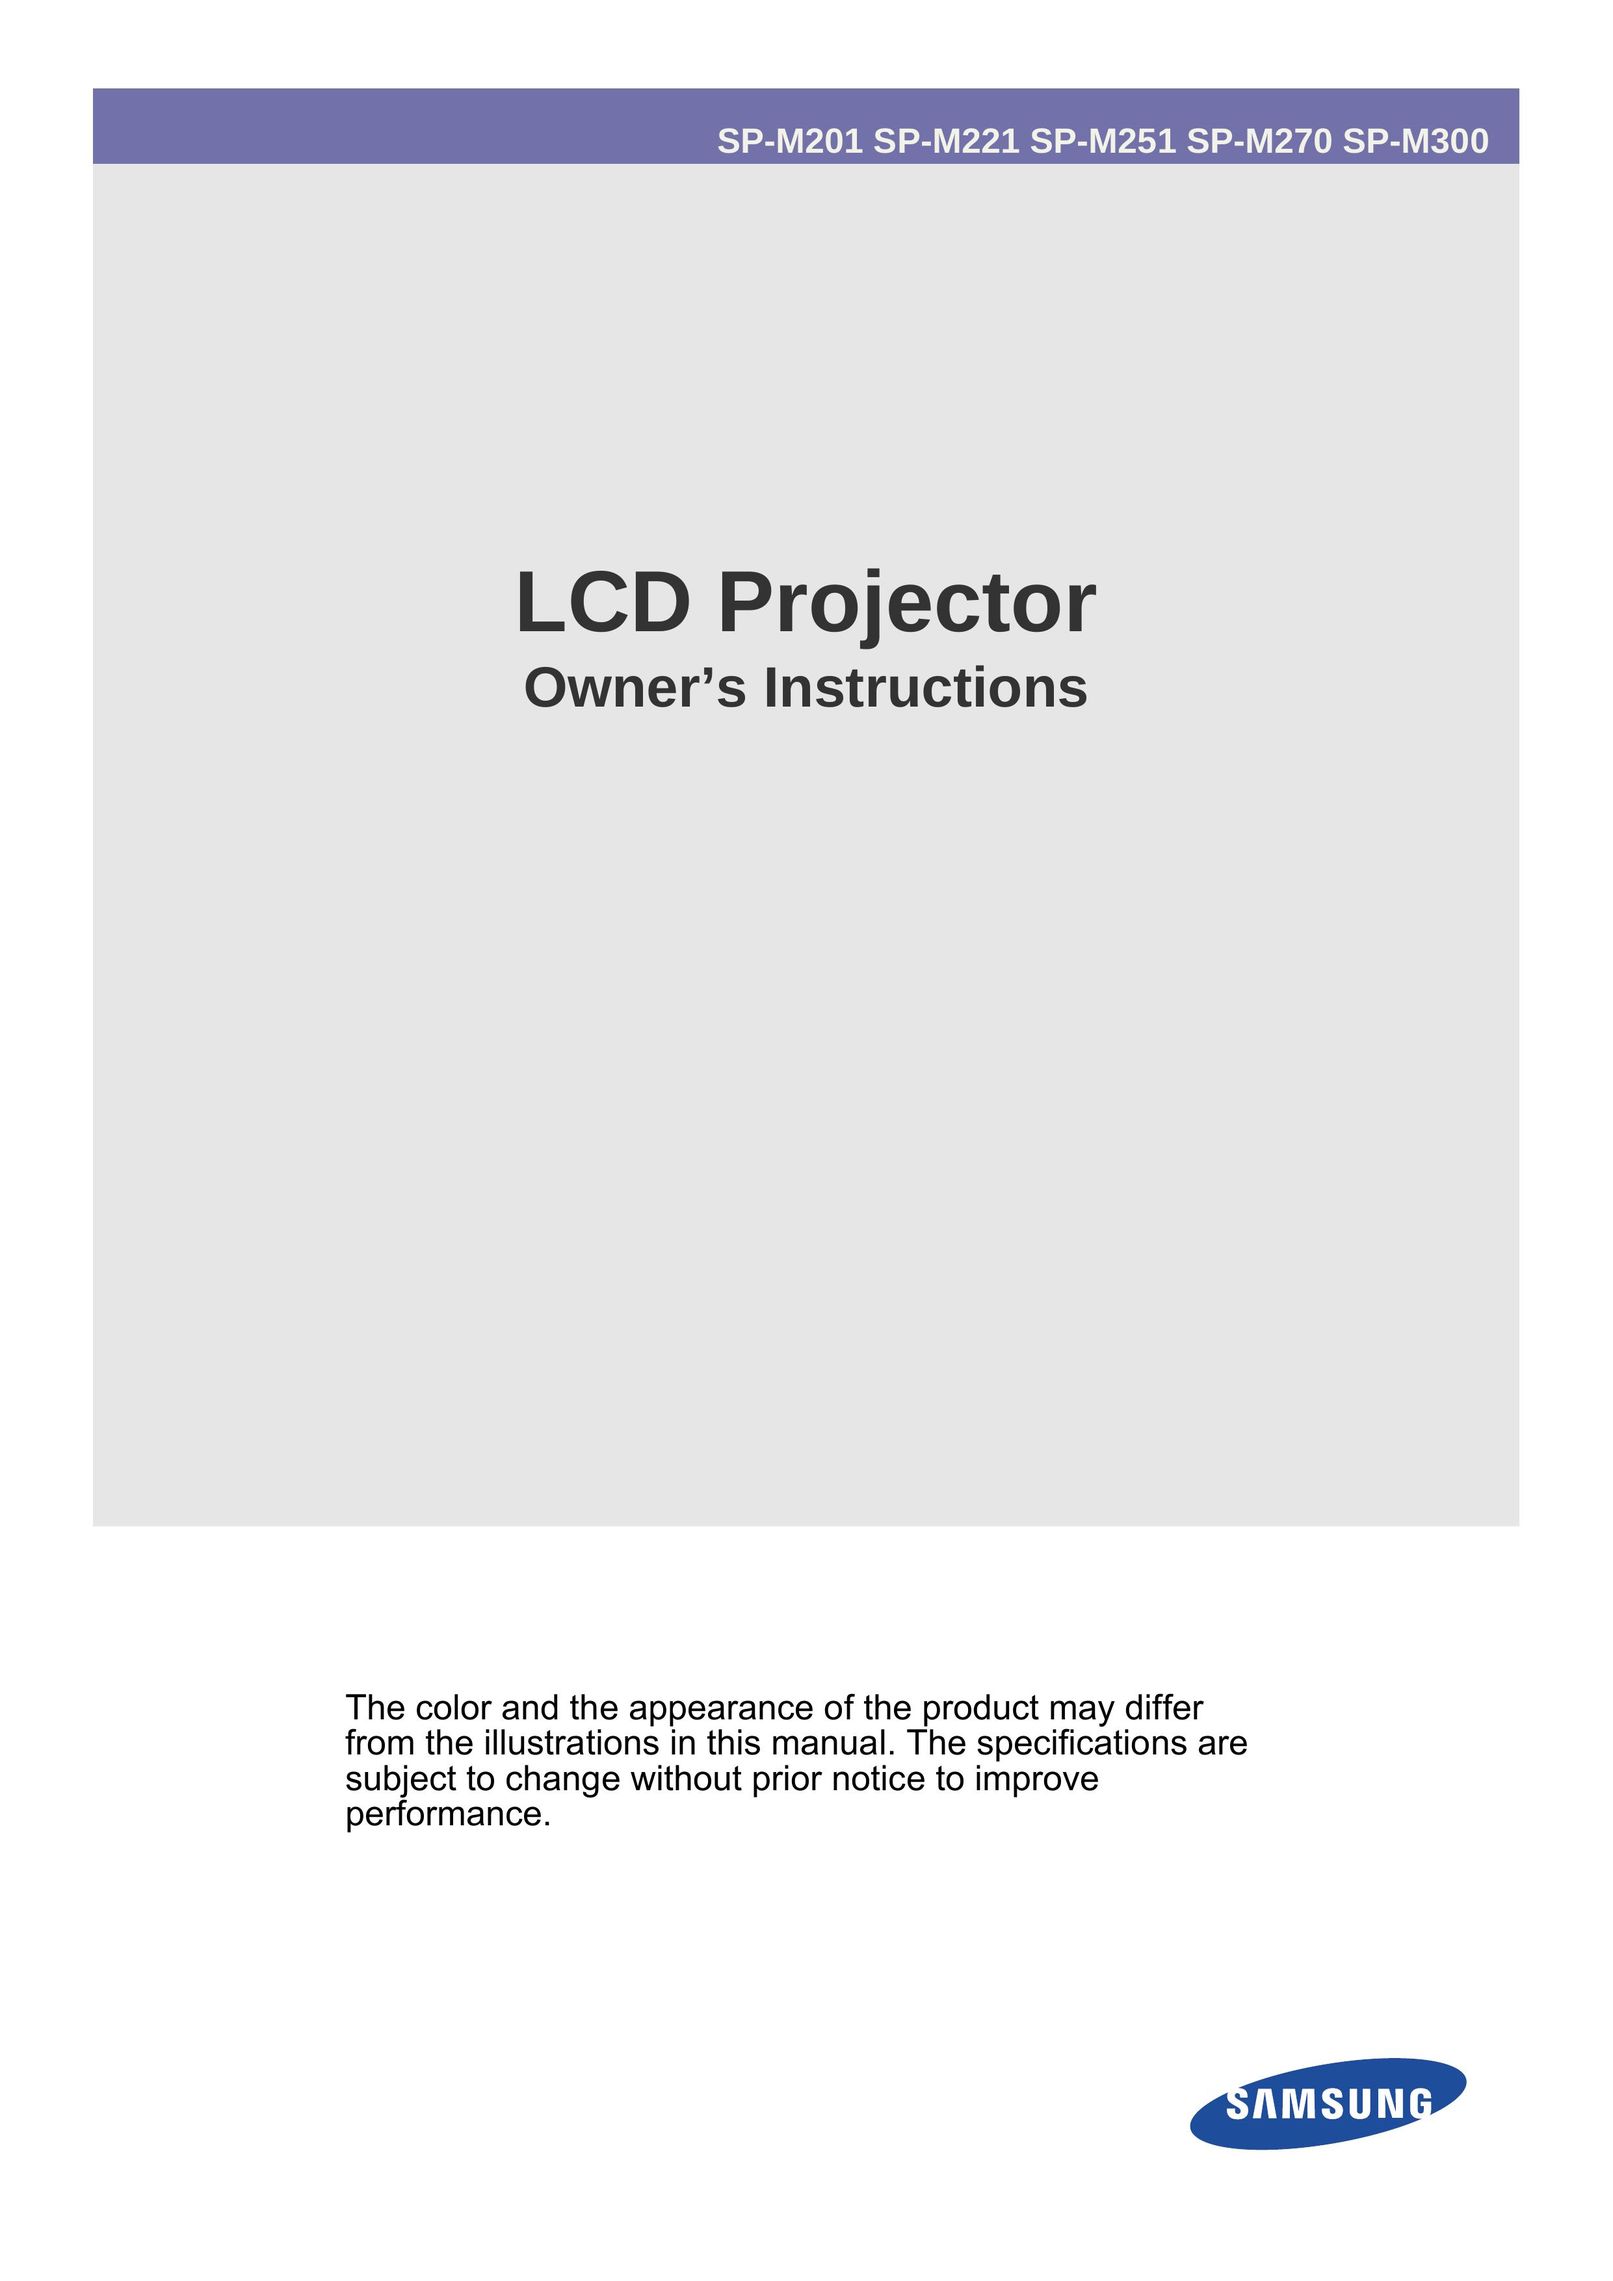 Samsung SP-M251 Projector User Manual